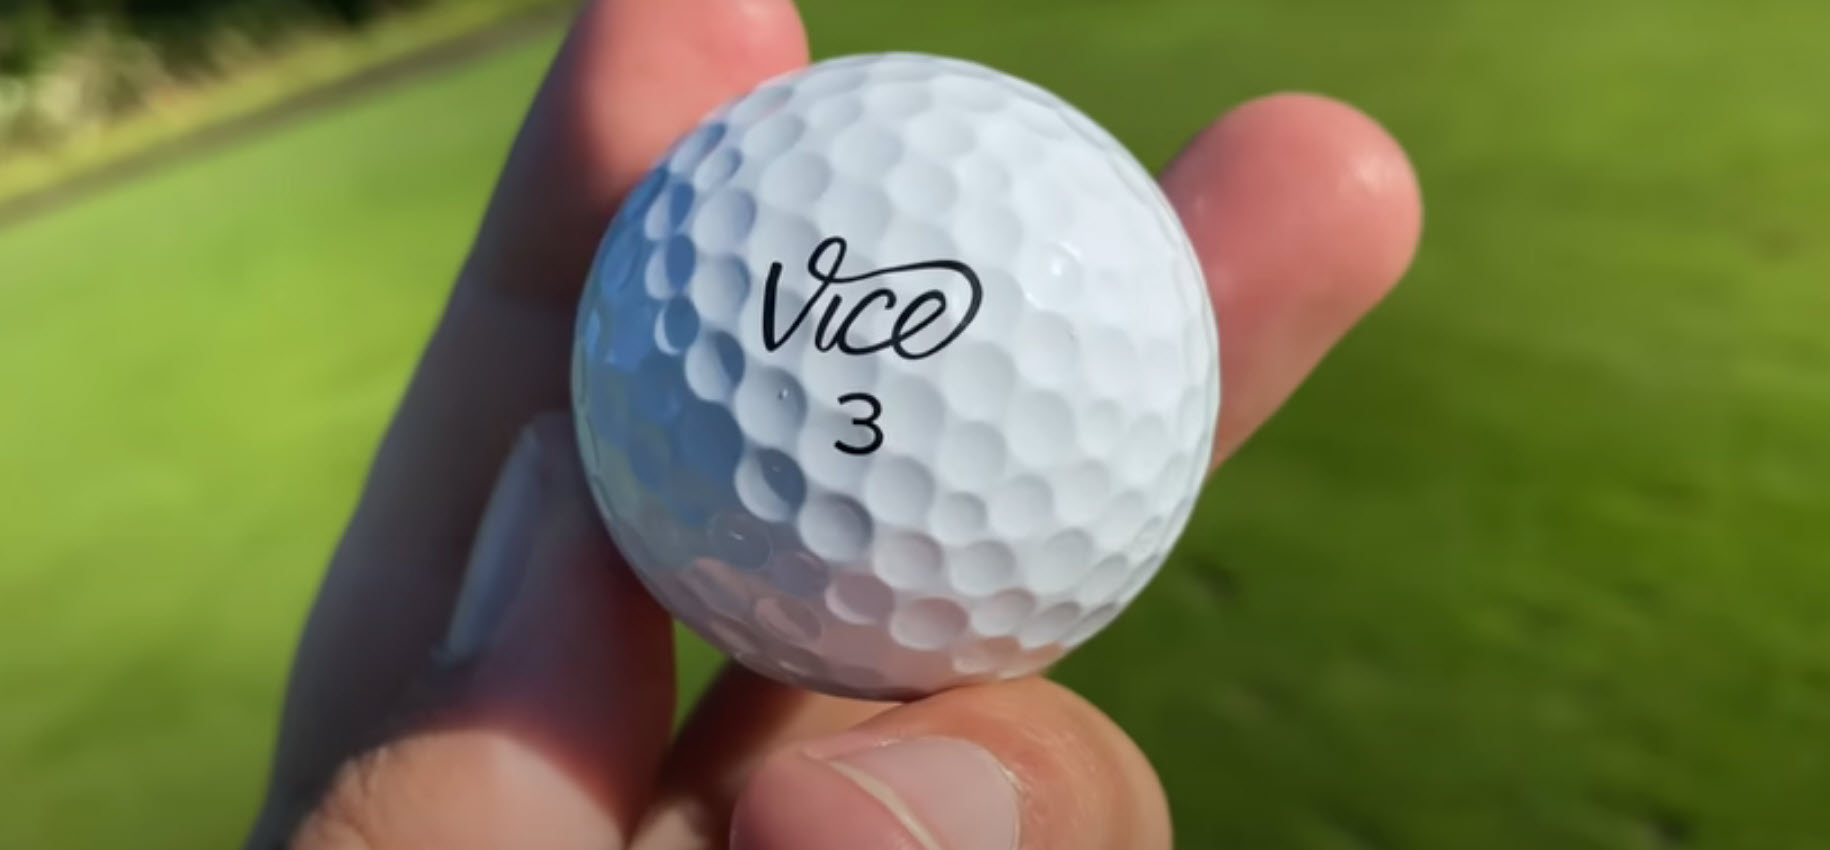 vice balls